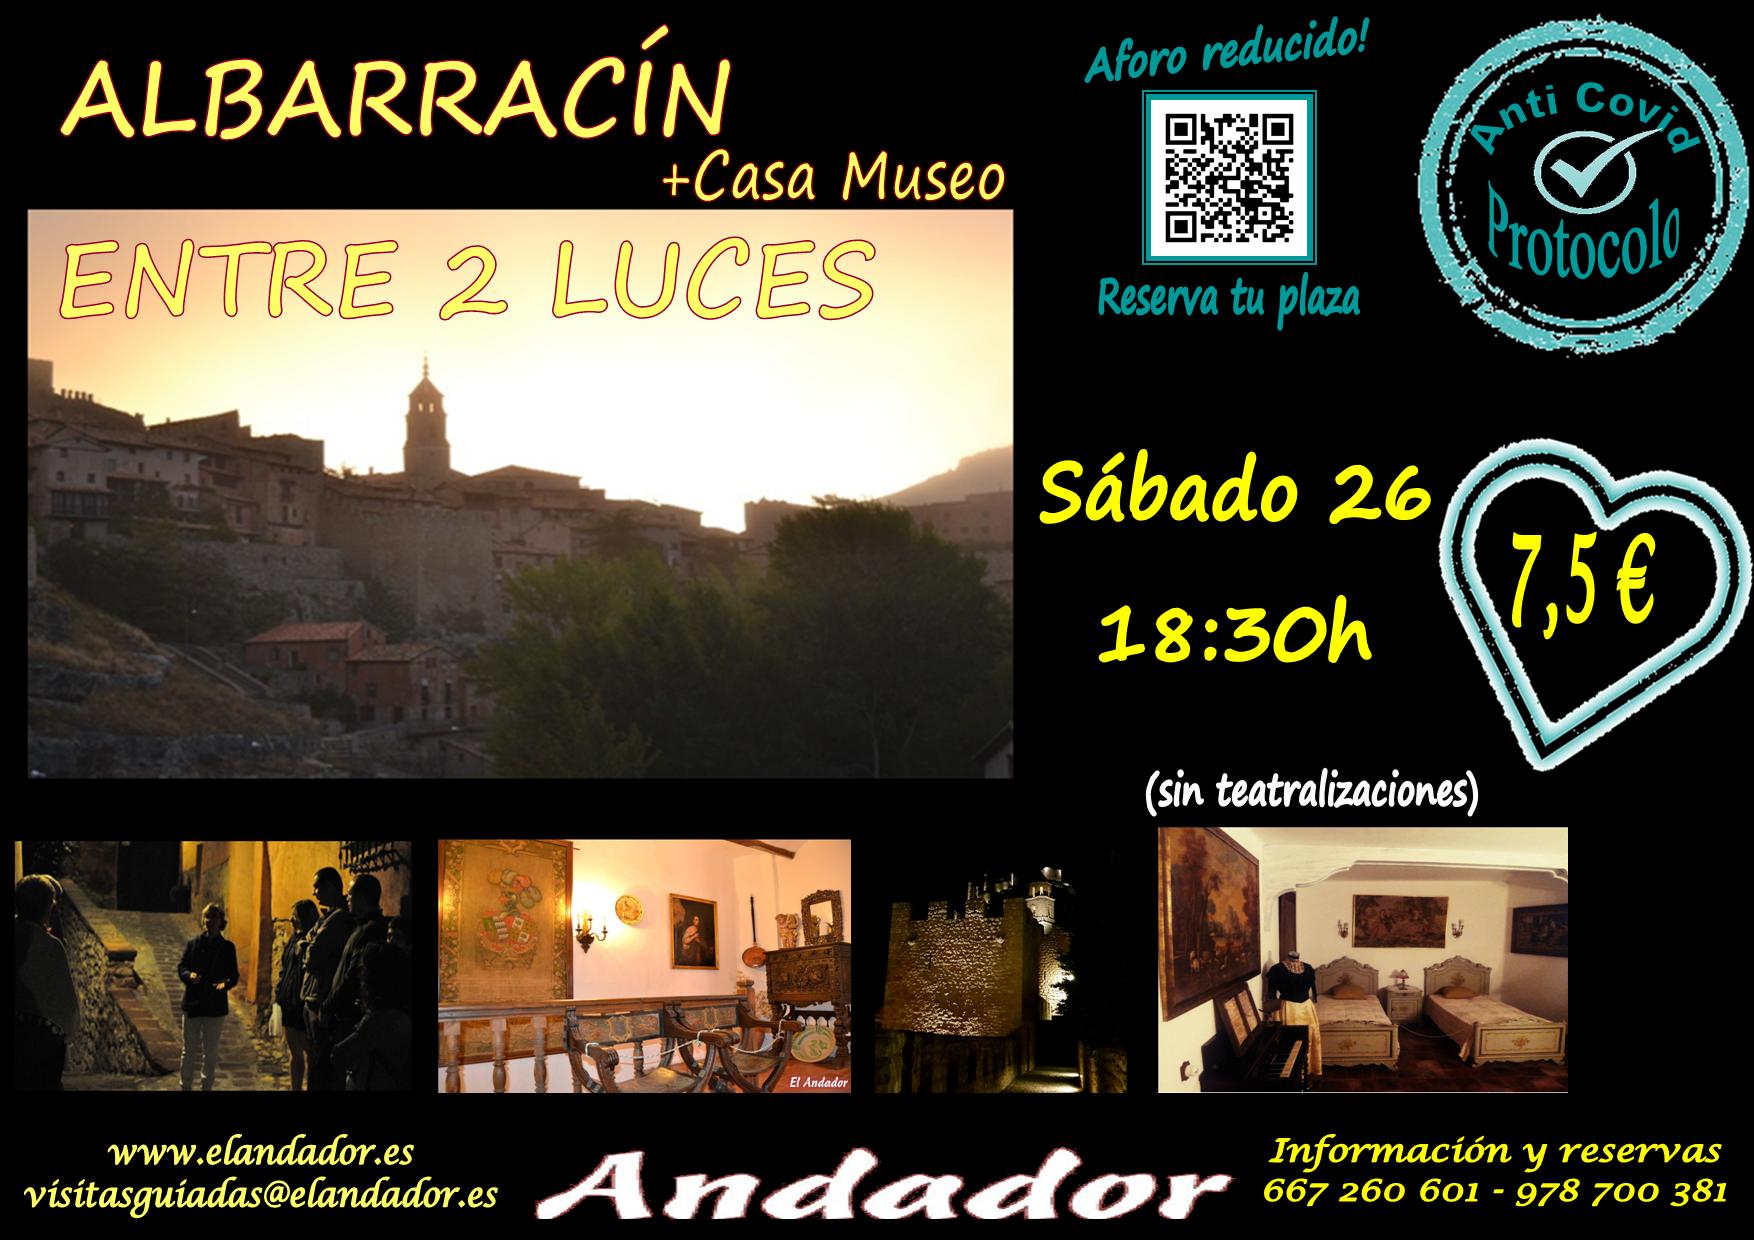 Este Sábado 26… Albarracín Especial Entre 2 Luces…aforos más reducidos!